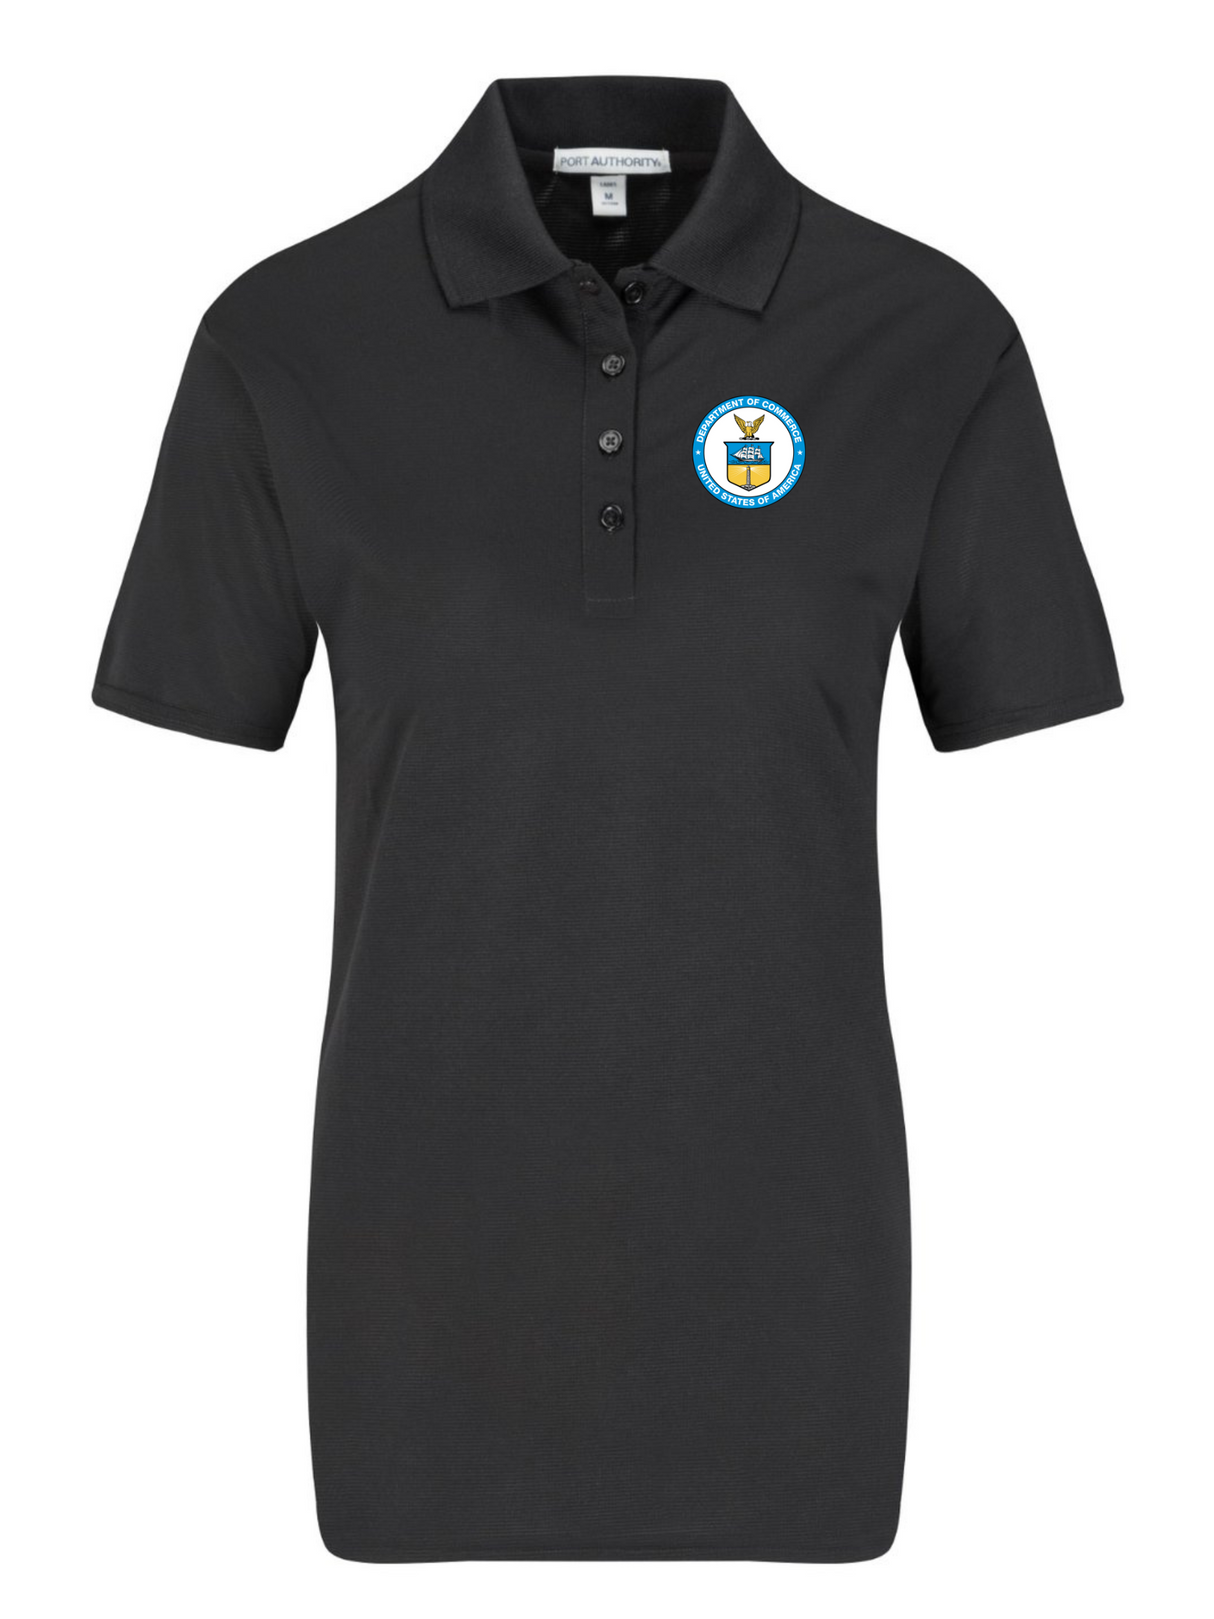 Department of Commerce Polo Shirt - Women's Short Sleeve